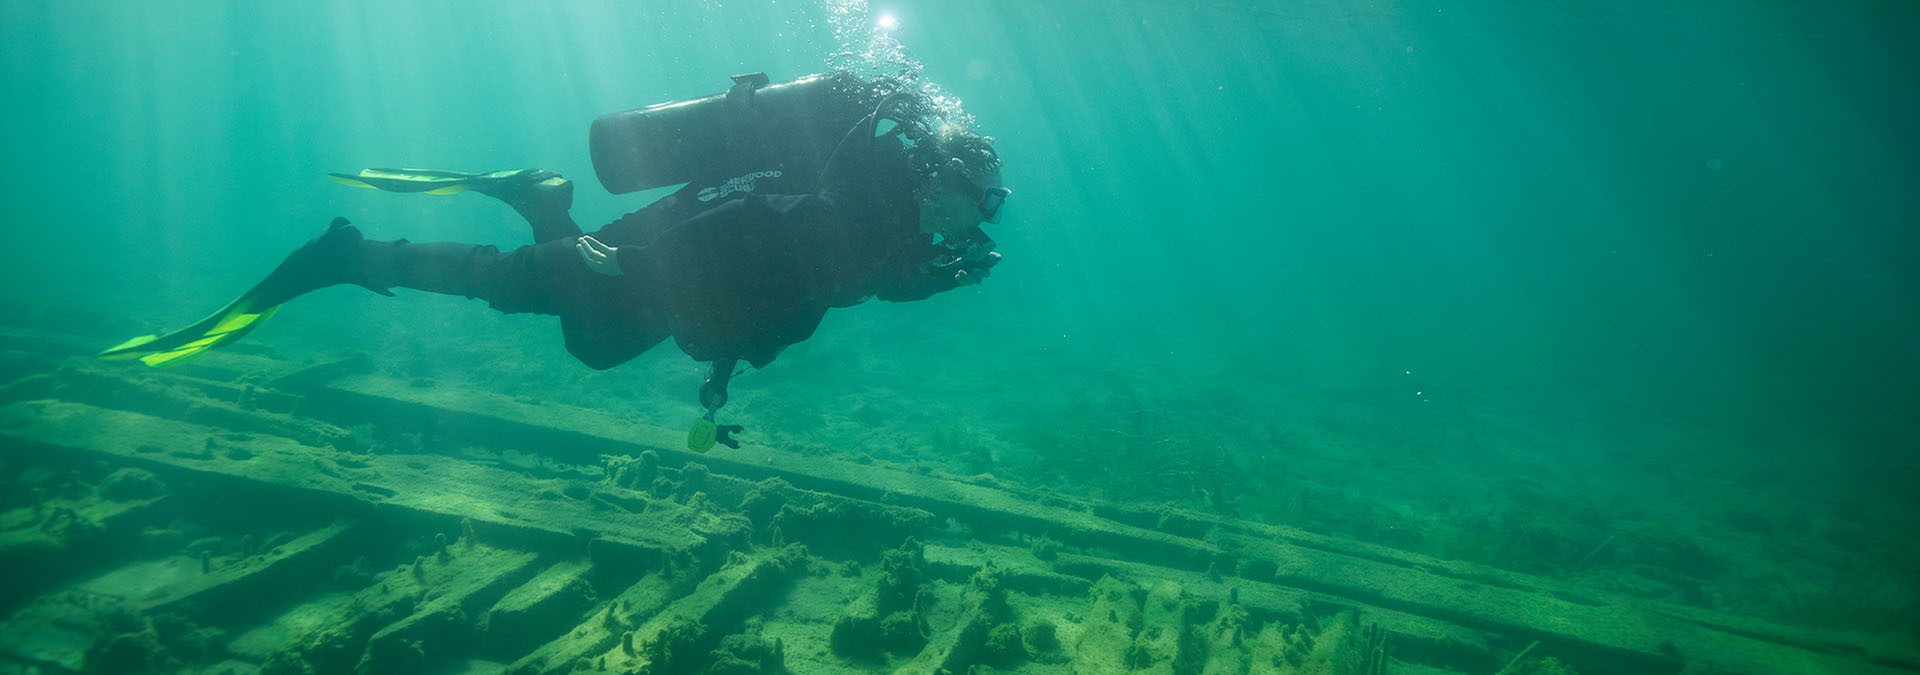 A person scuba diving around a shipwreck